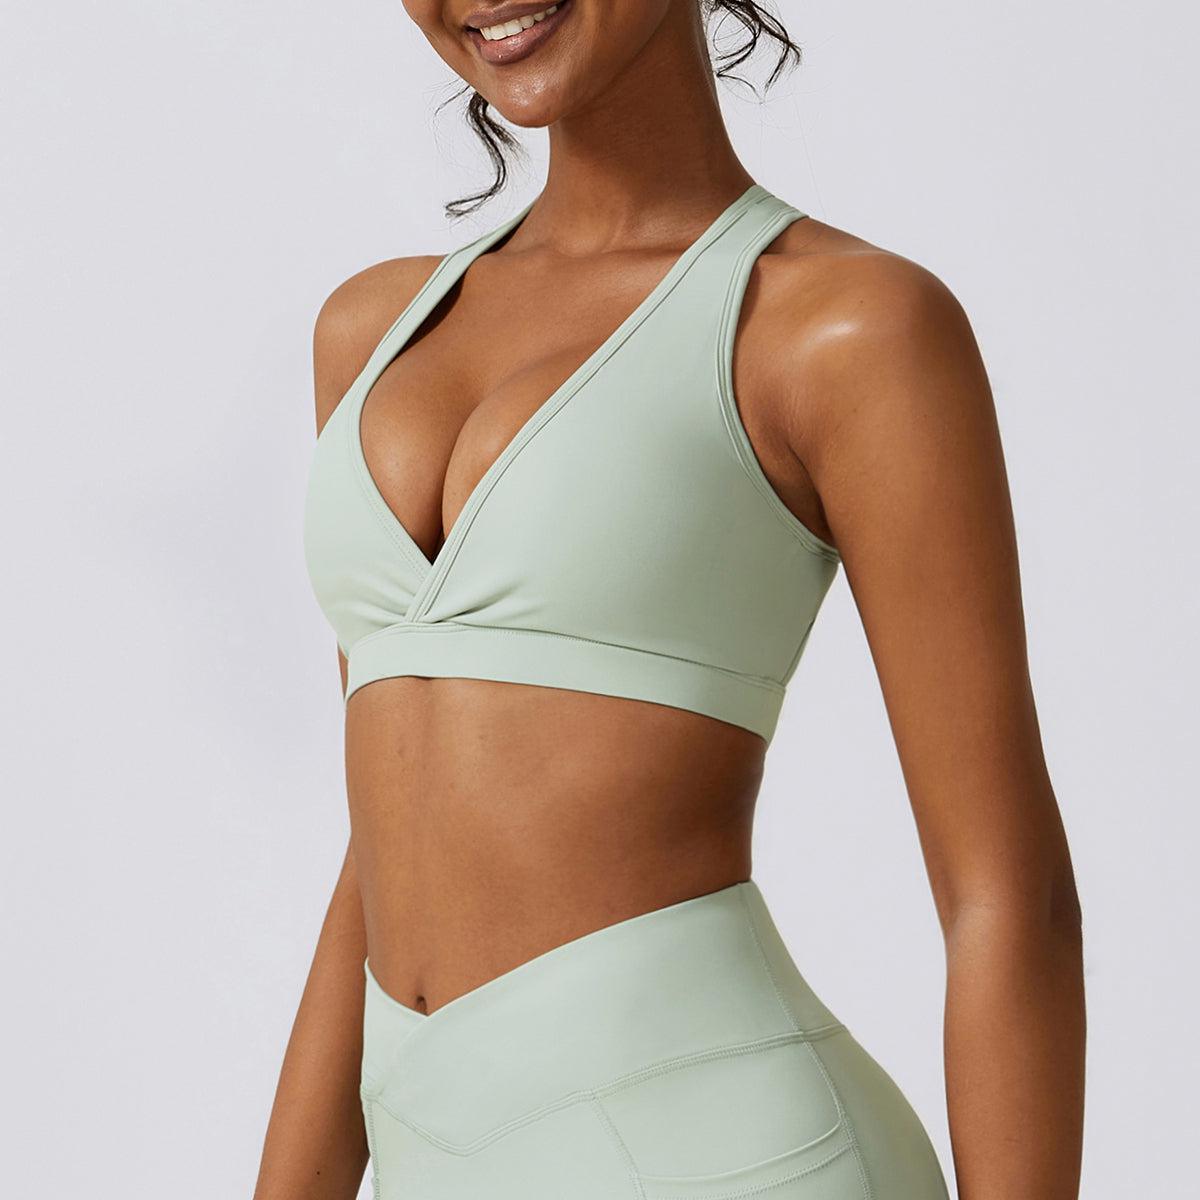 a woman in a green sports bra top